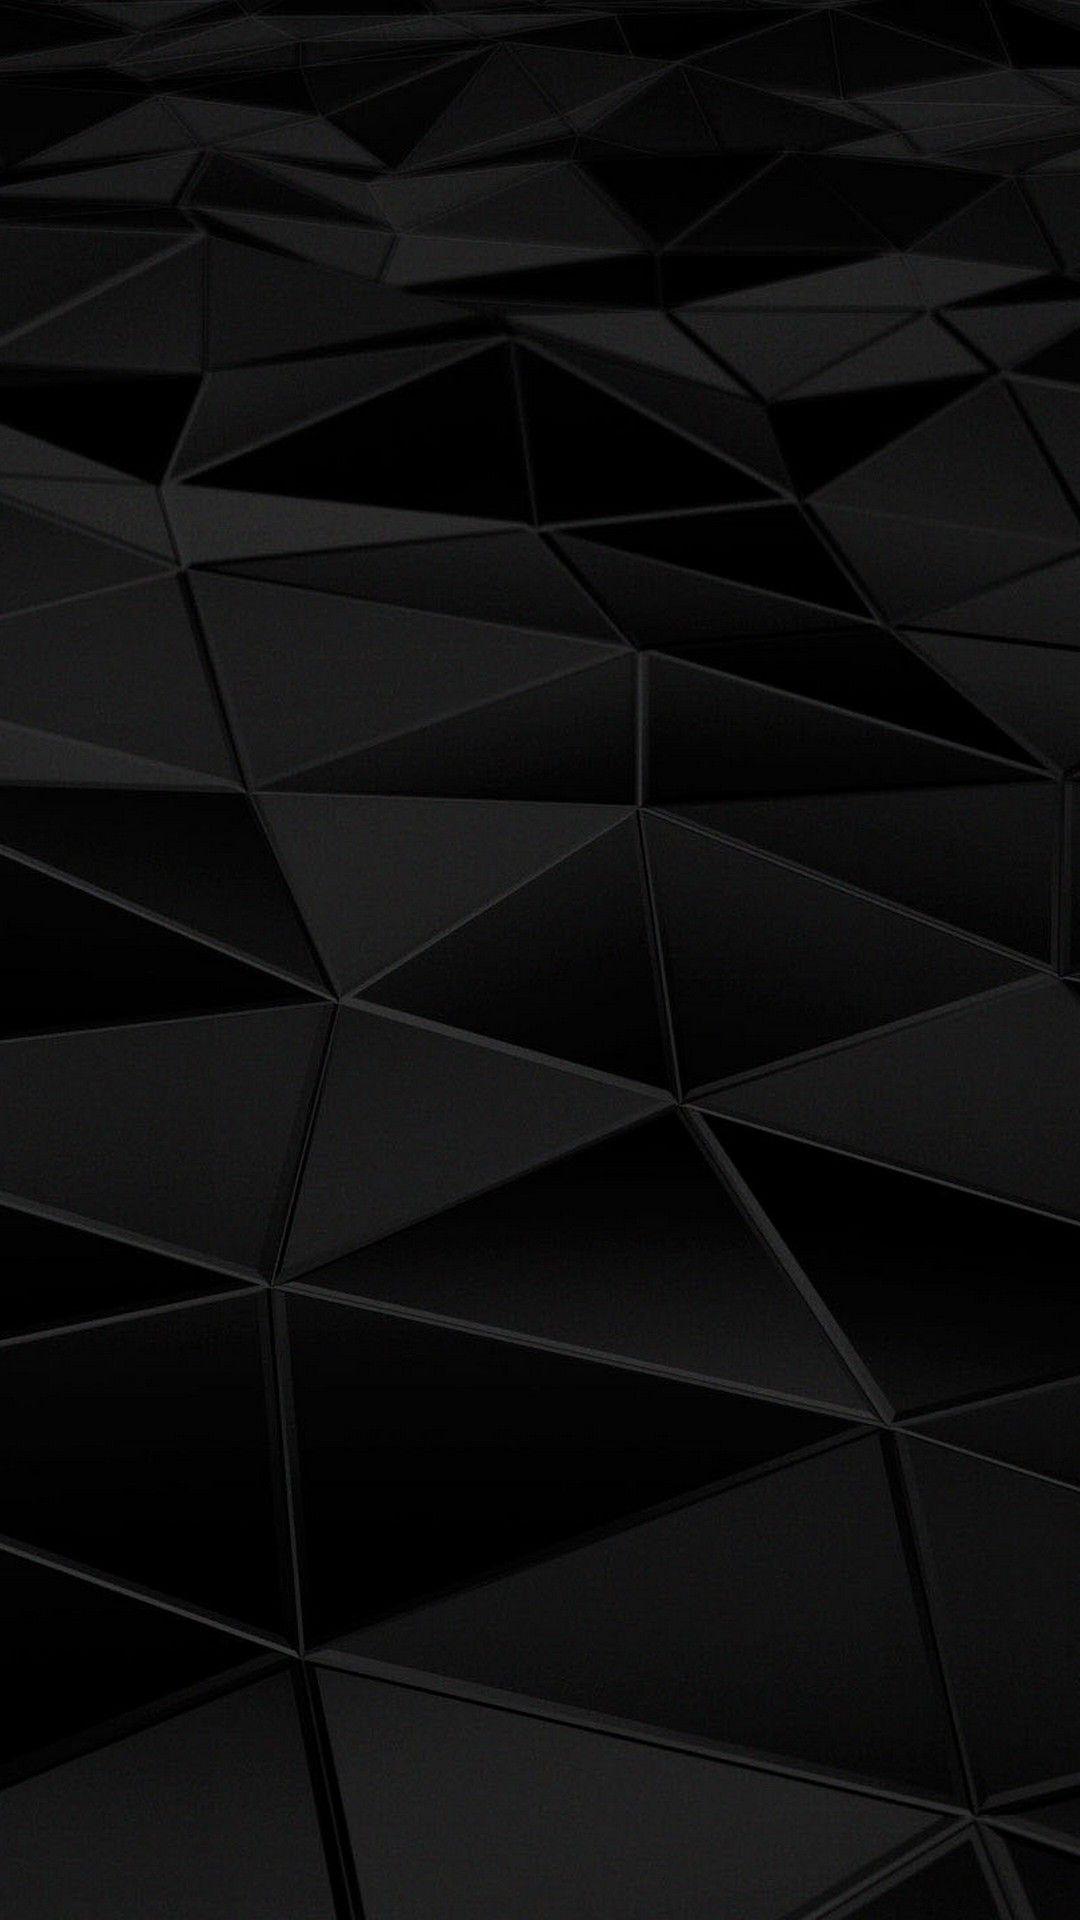 1080X1920 HD Black Wallpapers  Top Free 1080X1920 HD Black Backgrounds   WallpaperAccess